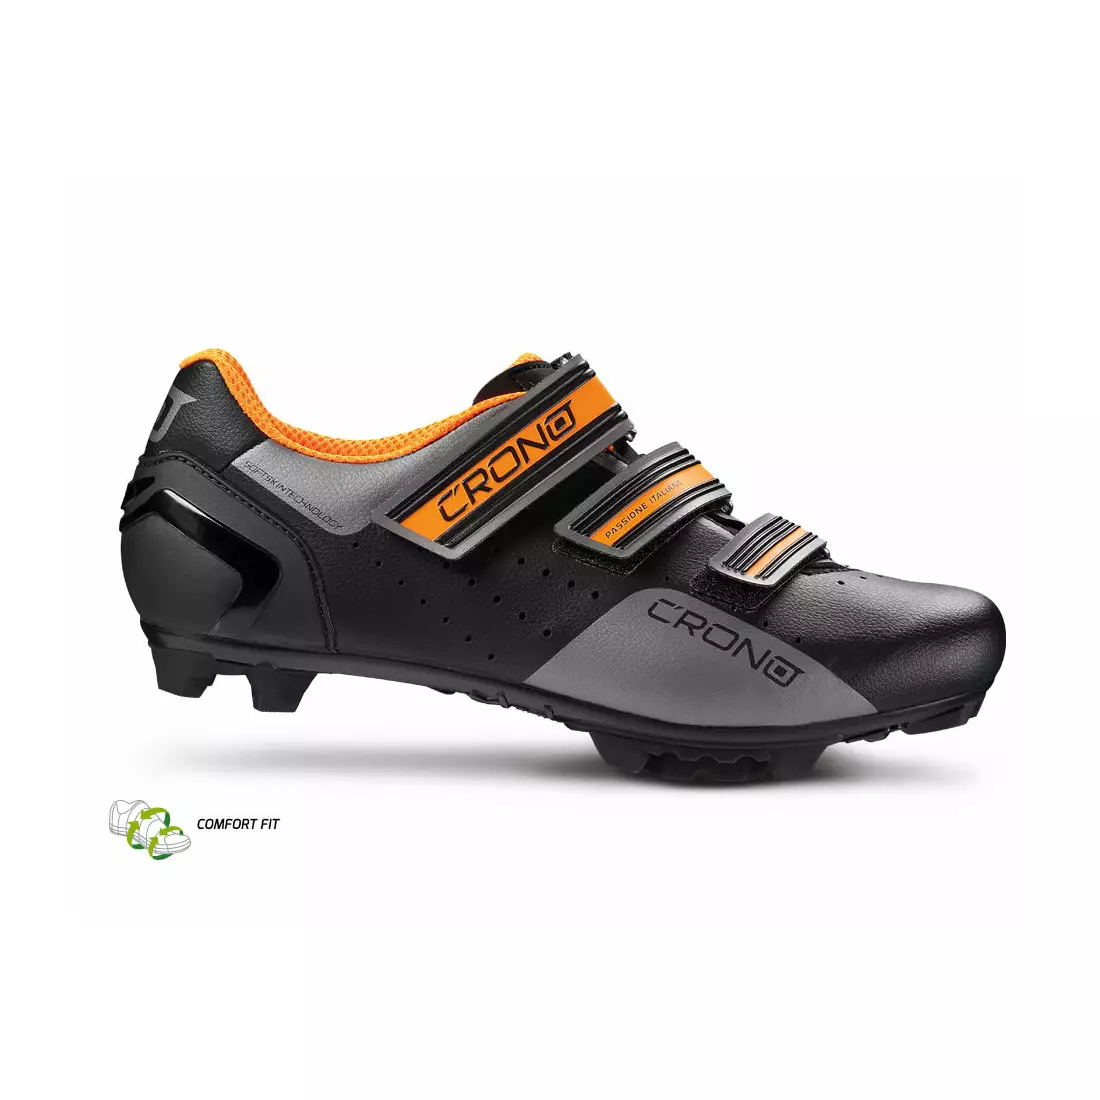 CRONO CX-4 NYLON MTB cycling shoes black/orange